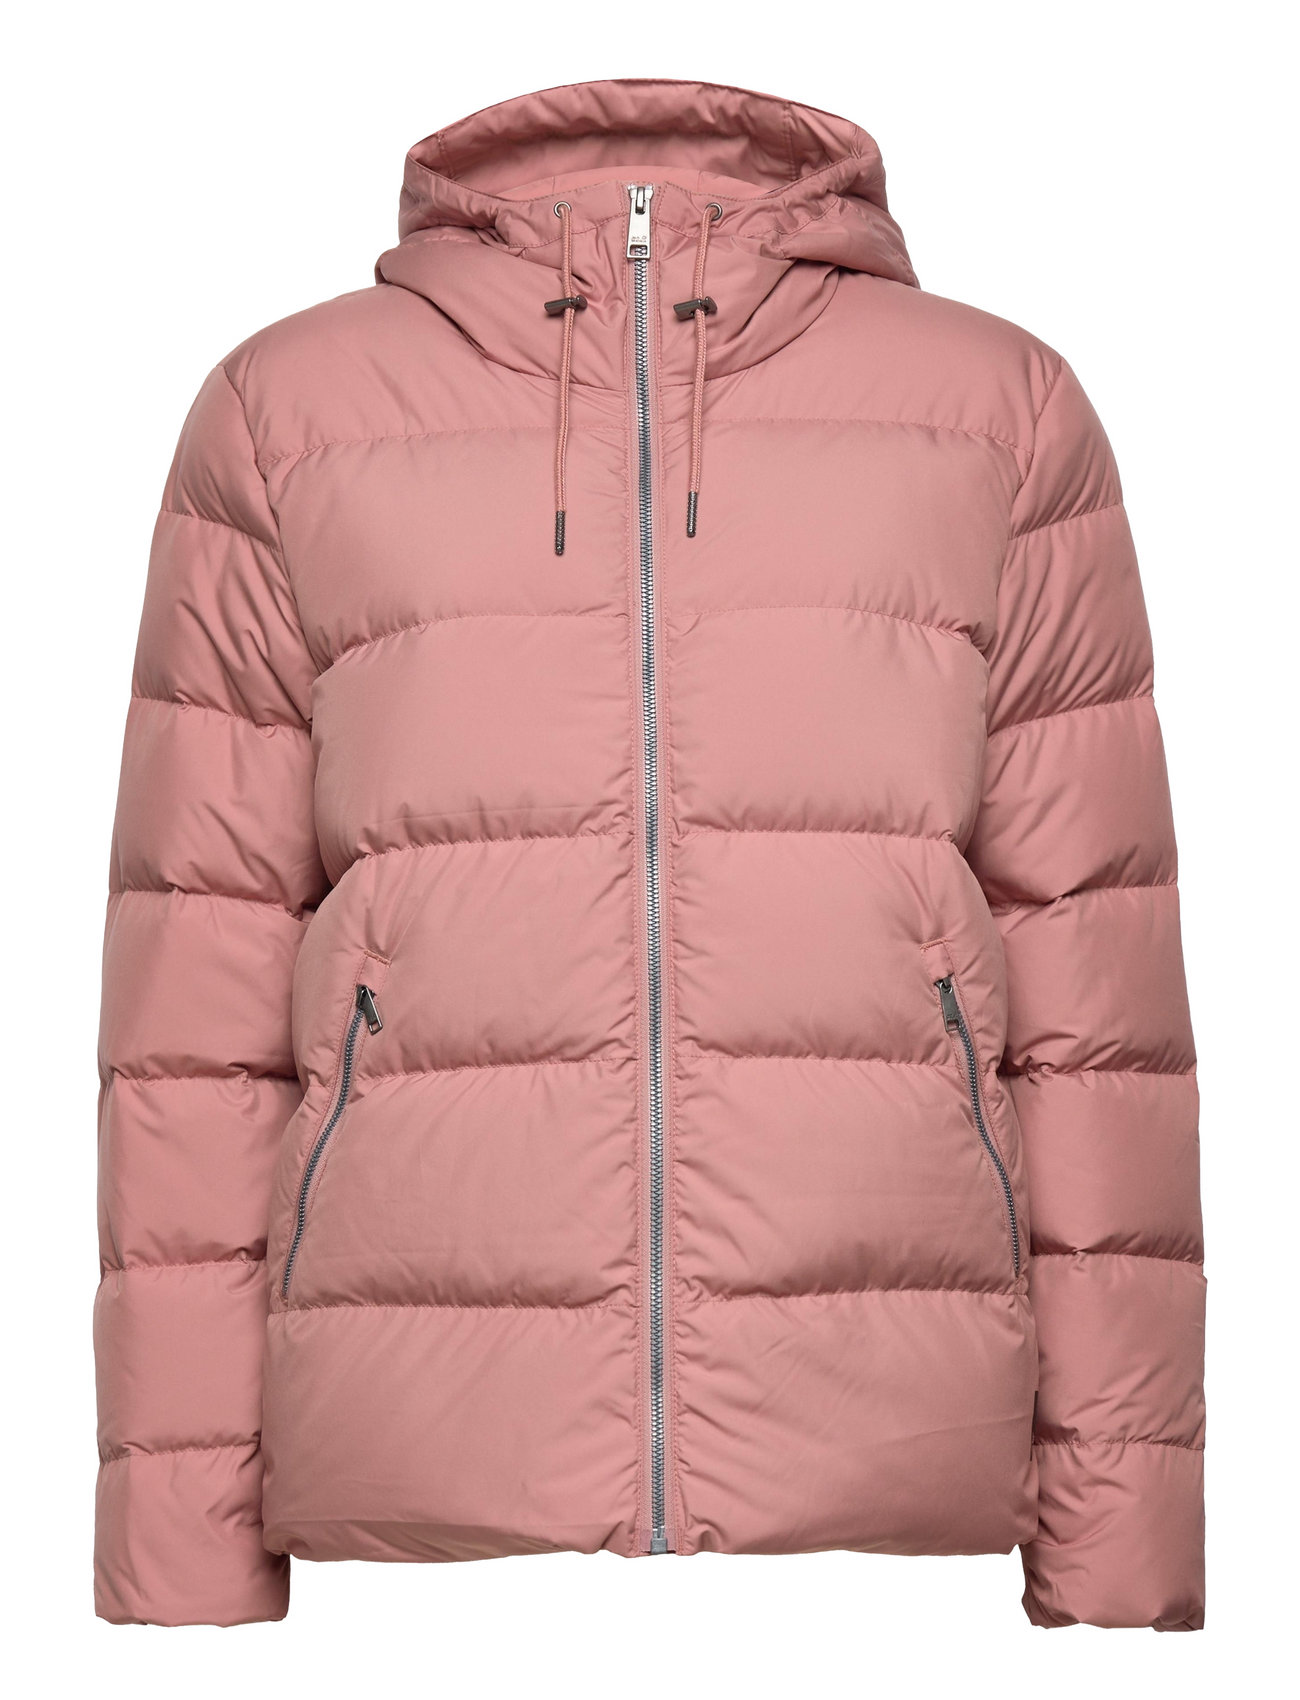 Jack Wolfskin Frozen shop Palace Booztlet & – – W jackets coats Jacket at